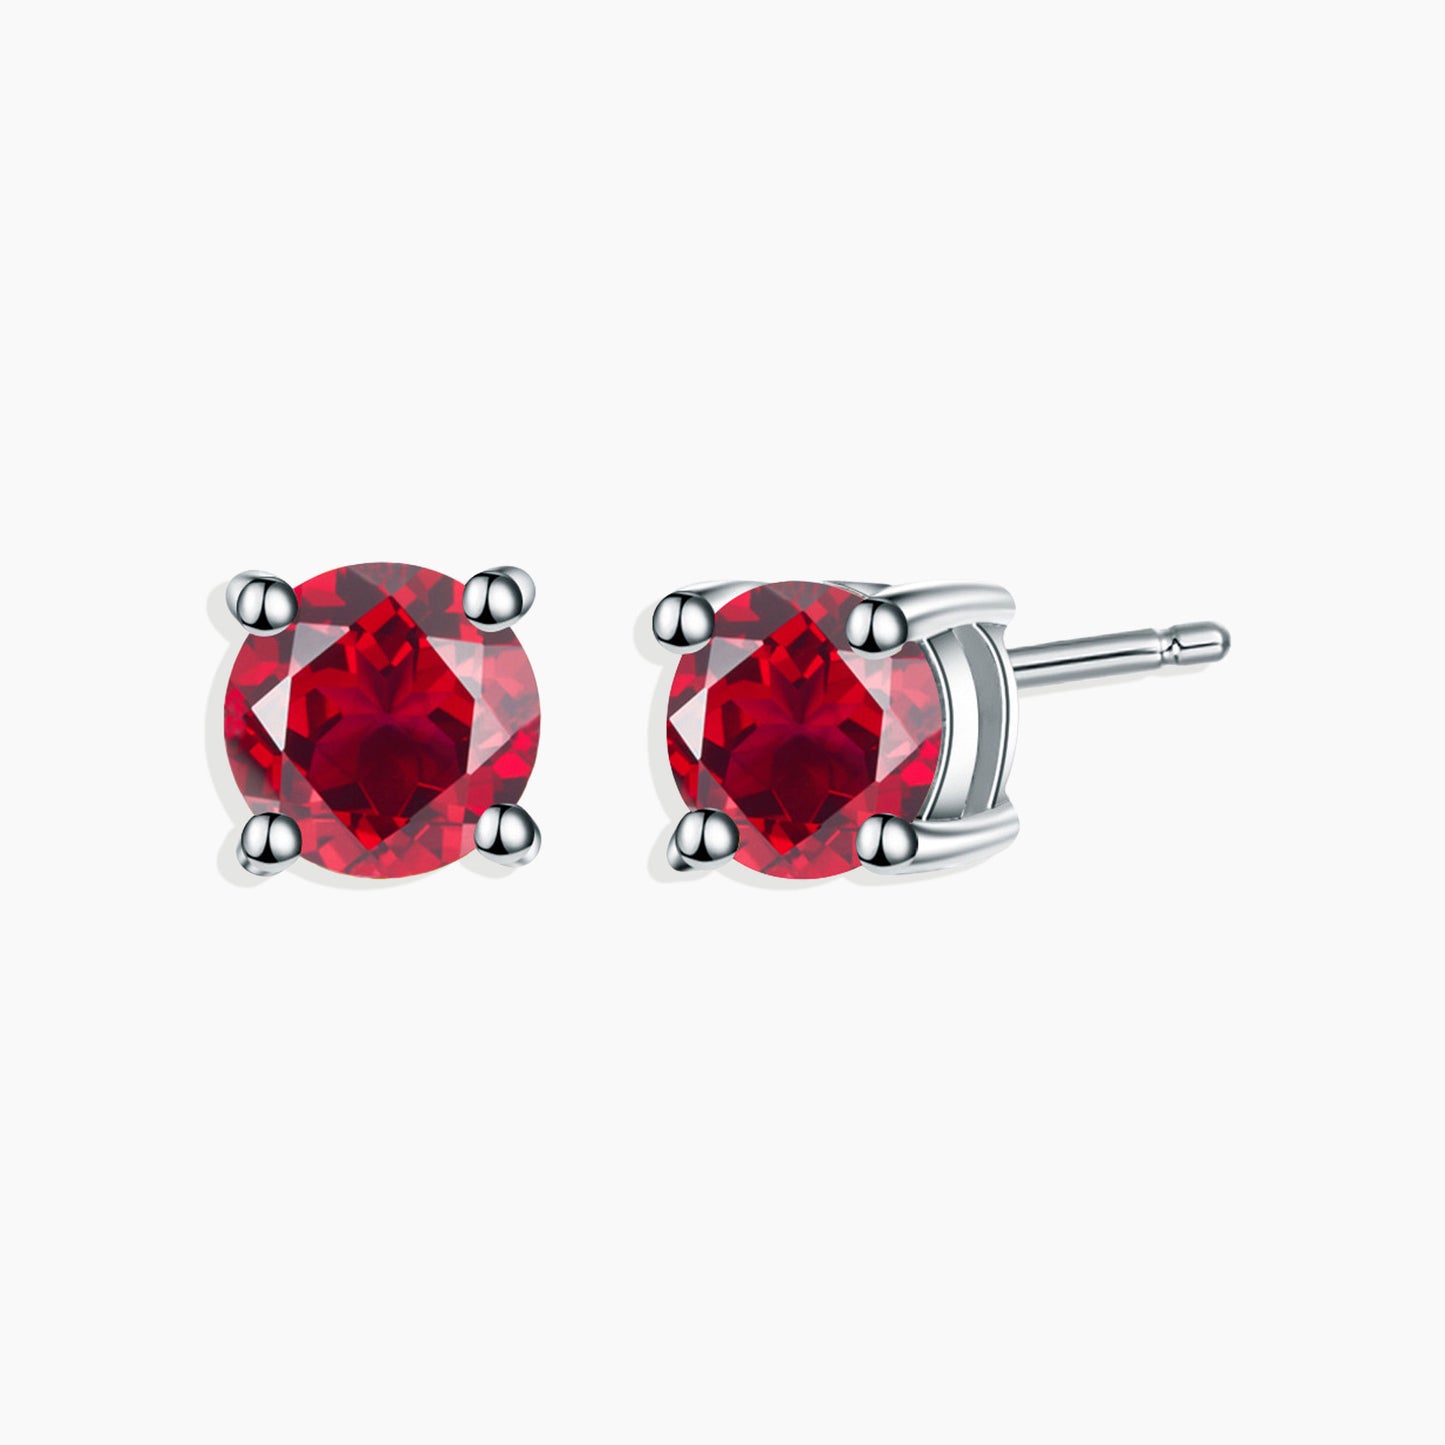 Round Cut Stud Earrings in Sterling Silver -  Ruby